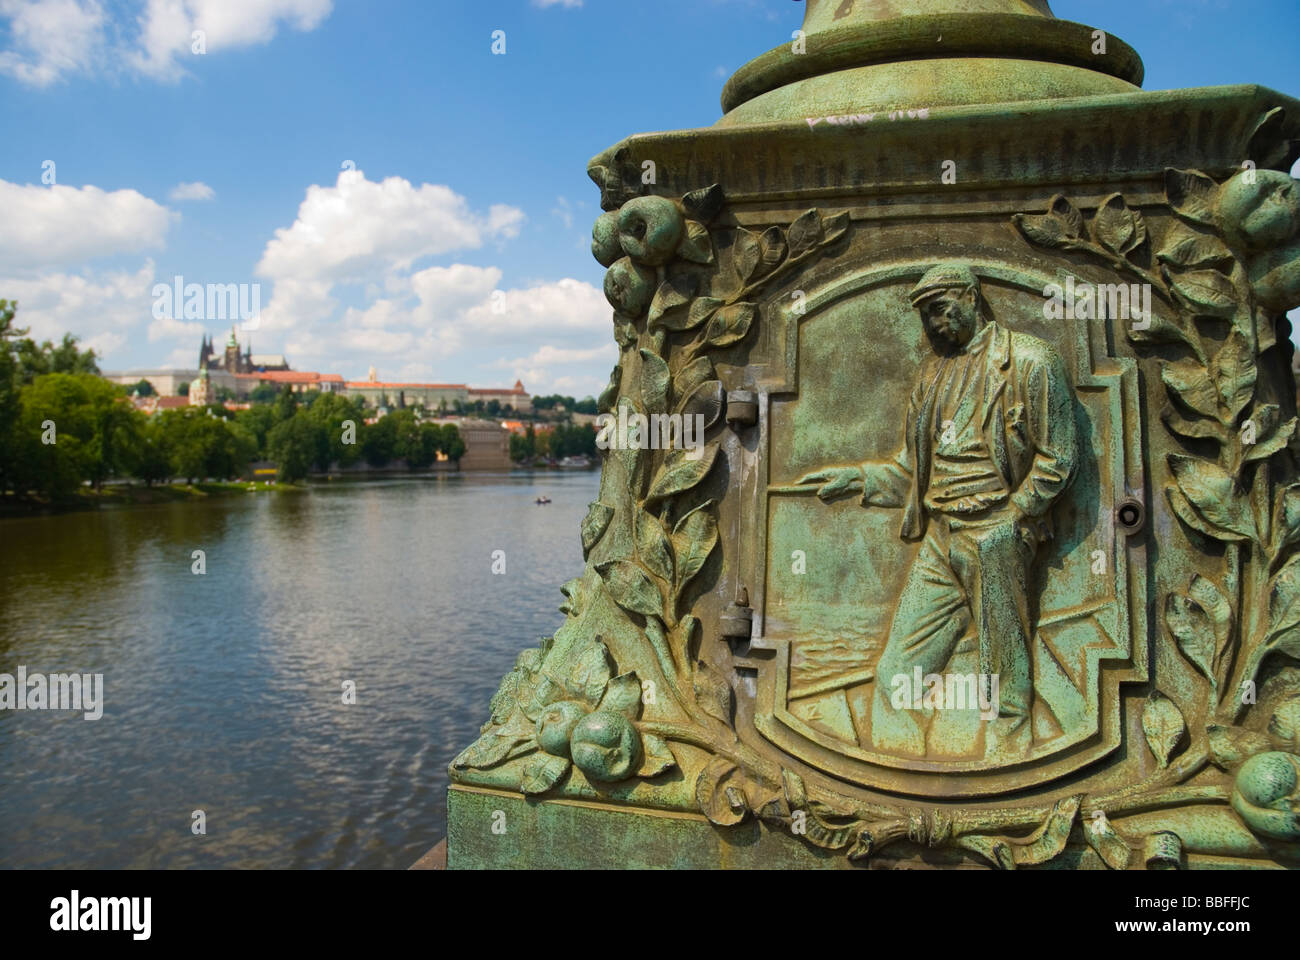 Wrough iron decoration on Legii most bridge in central Prague Czech Republic Europe Stock Photo